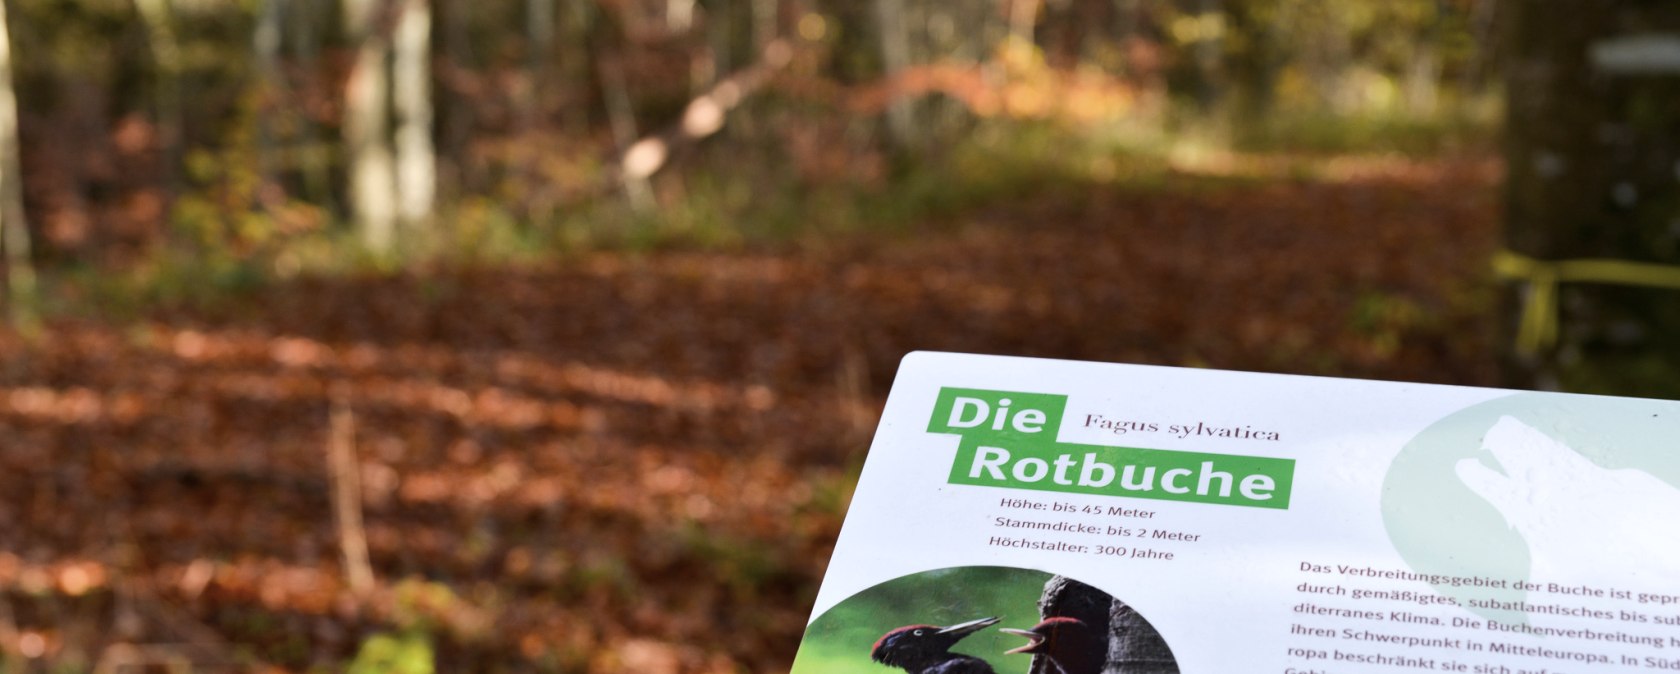 Wolfspfad - Die Rotbuche, © TI Bitburger Land